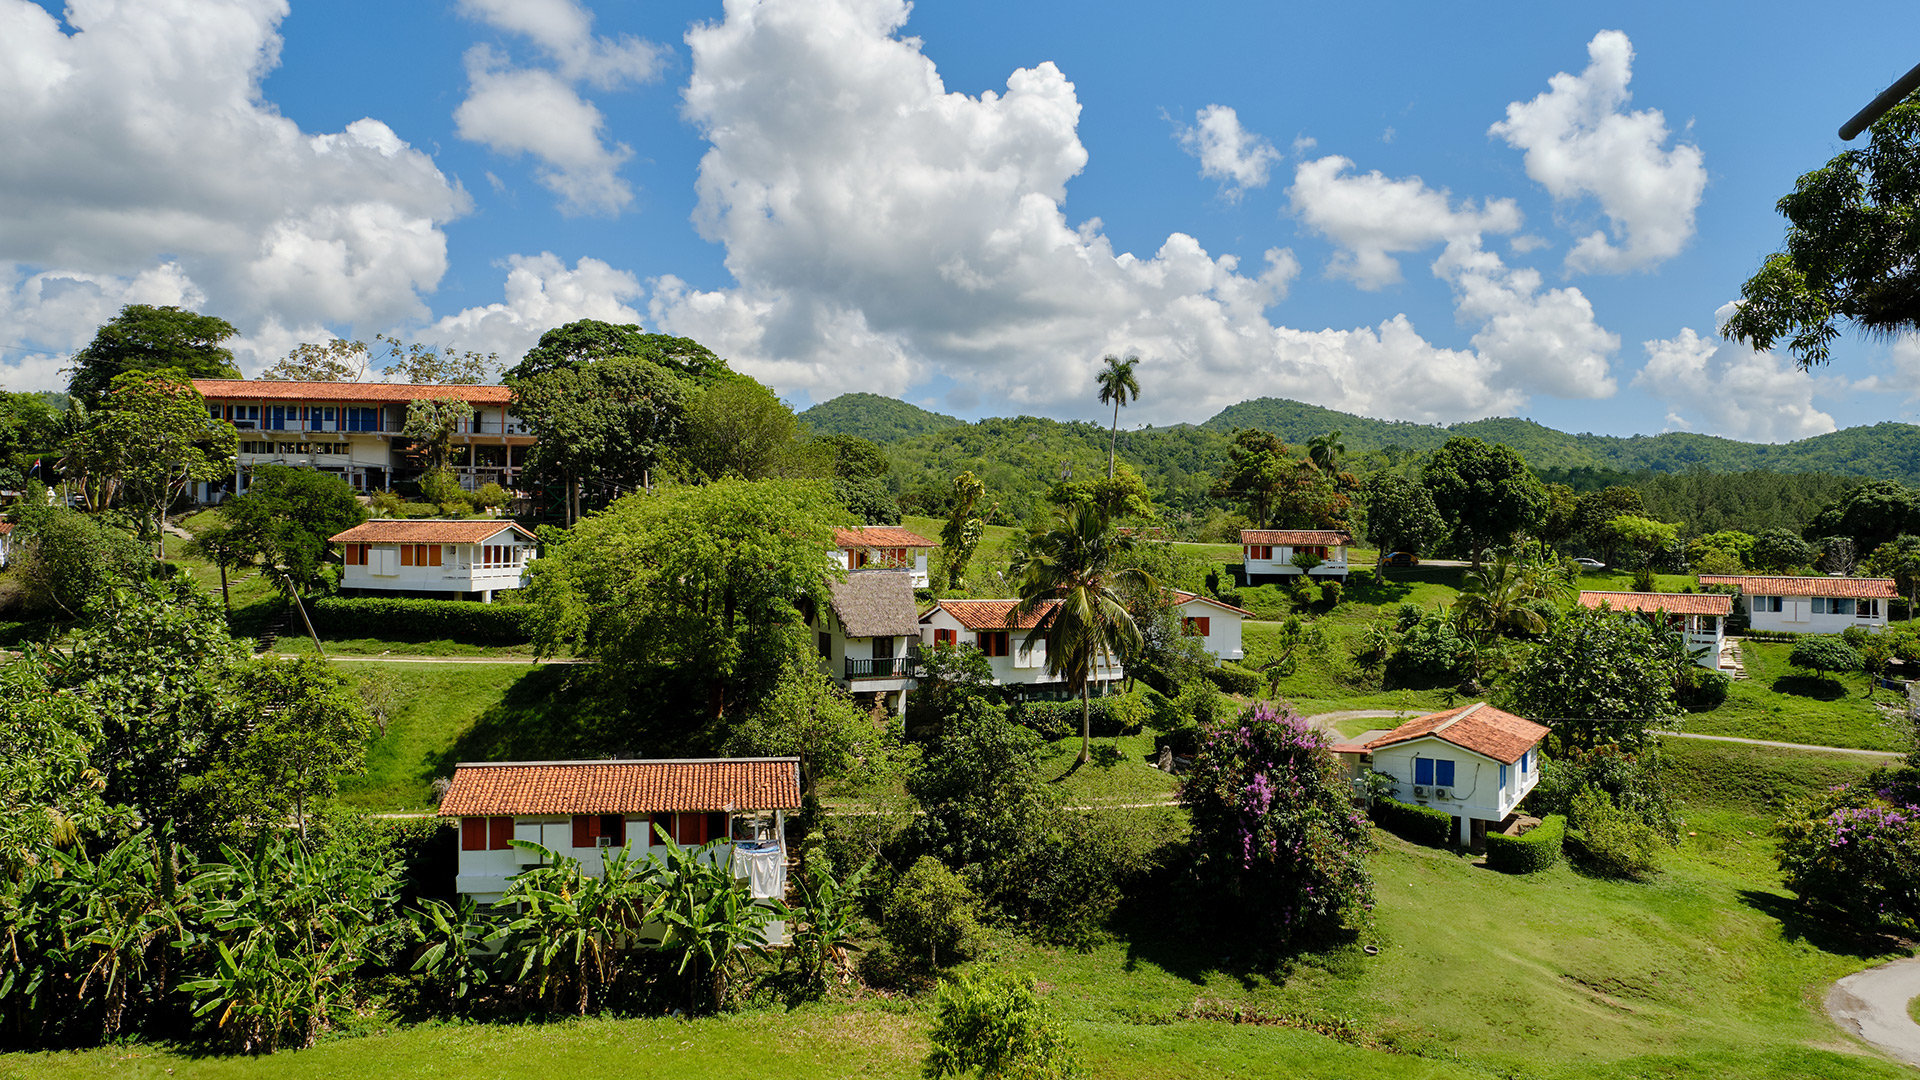 First Ecotourism Project in Cuba: “Las Terrazas”